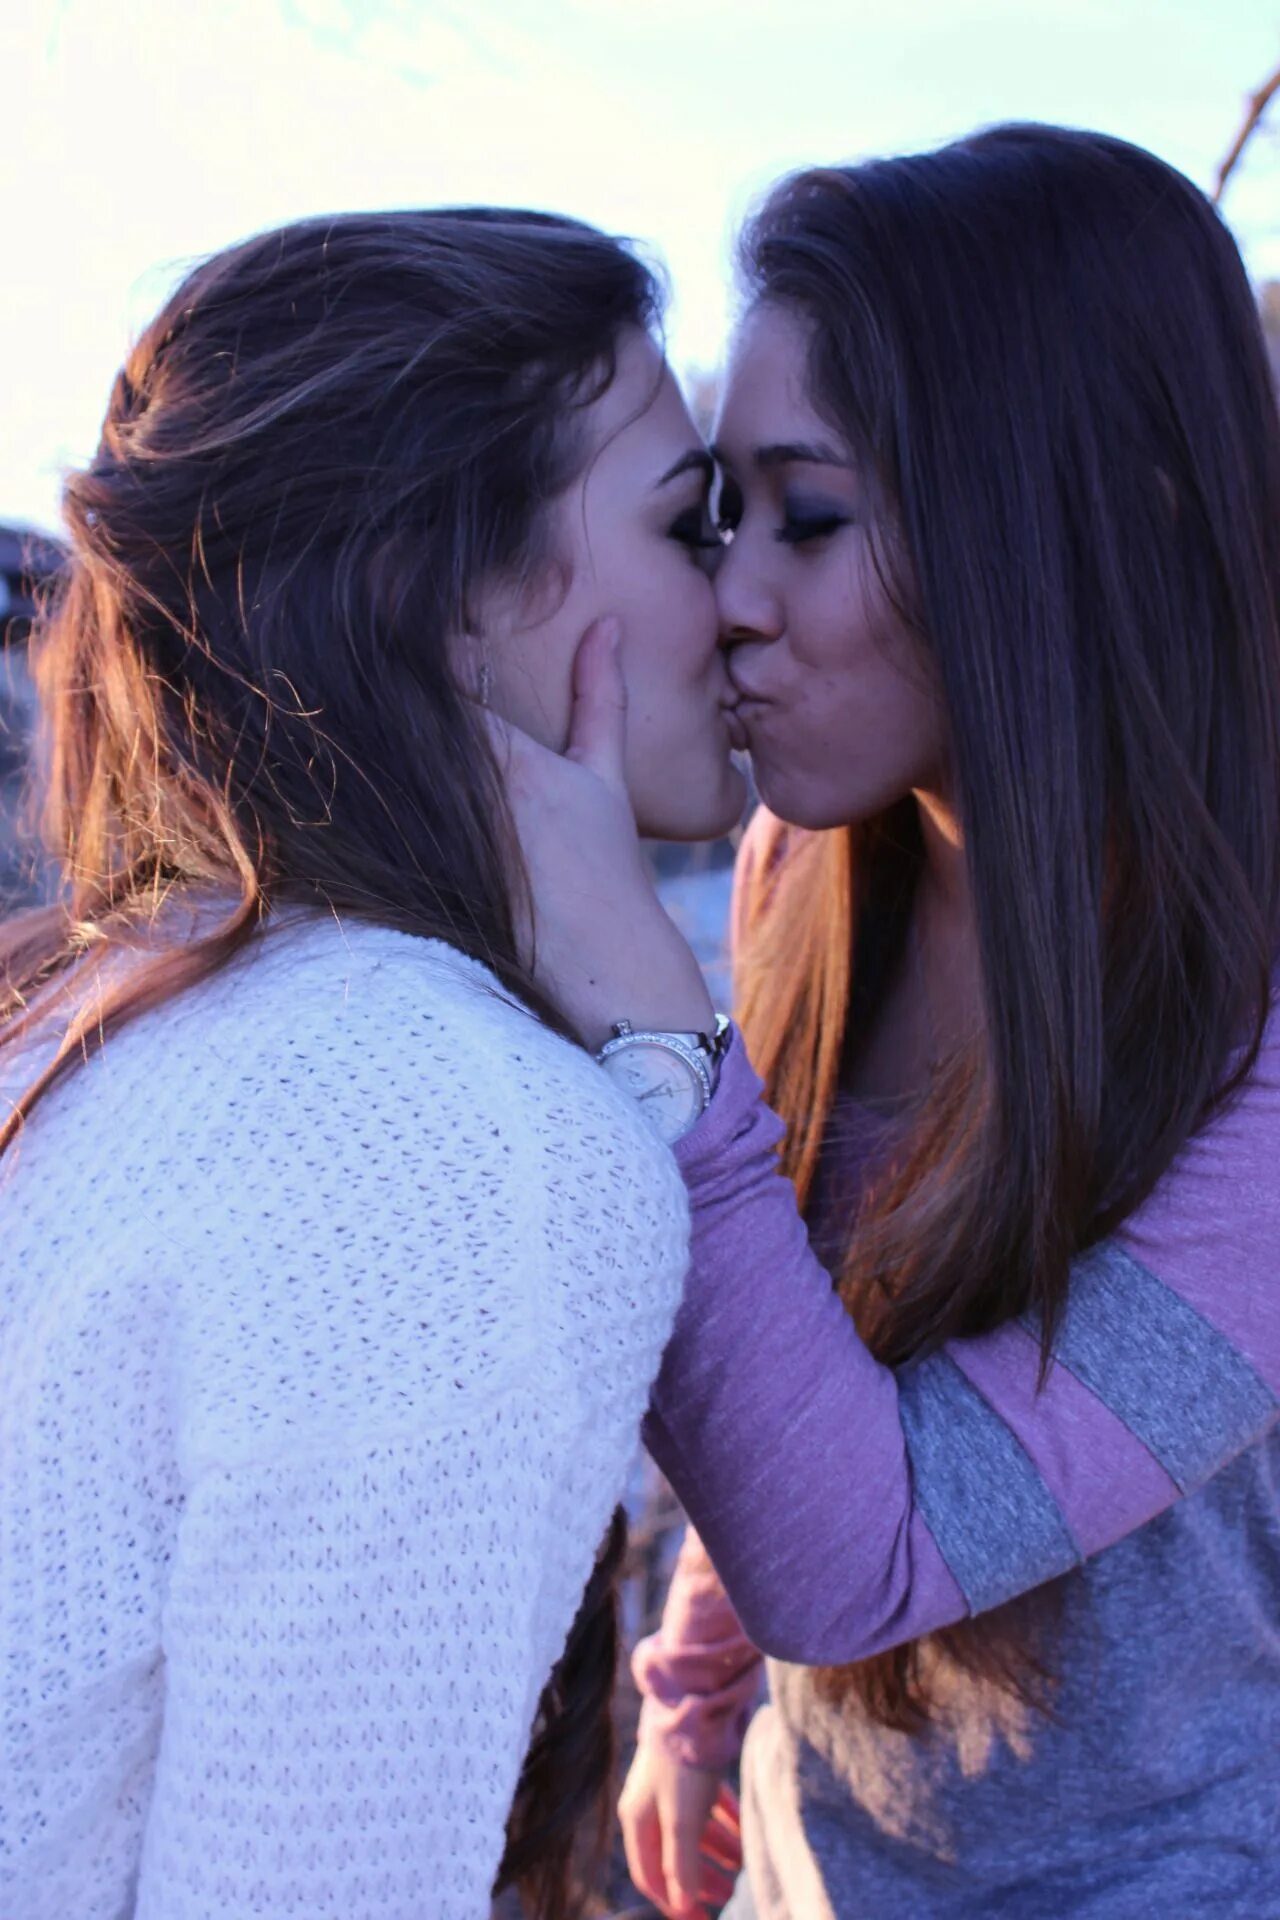 Two girlfriends Wallpaper. Pic lesbian Lebanese. Engage Kiss. Katrin ko lesbian photo. Девочек лезбиянок